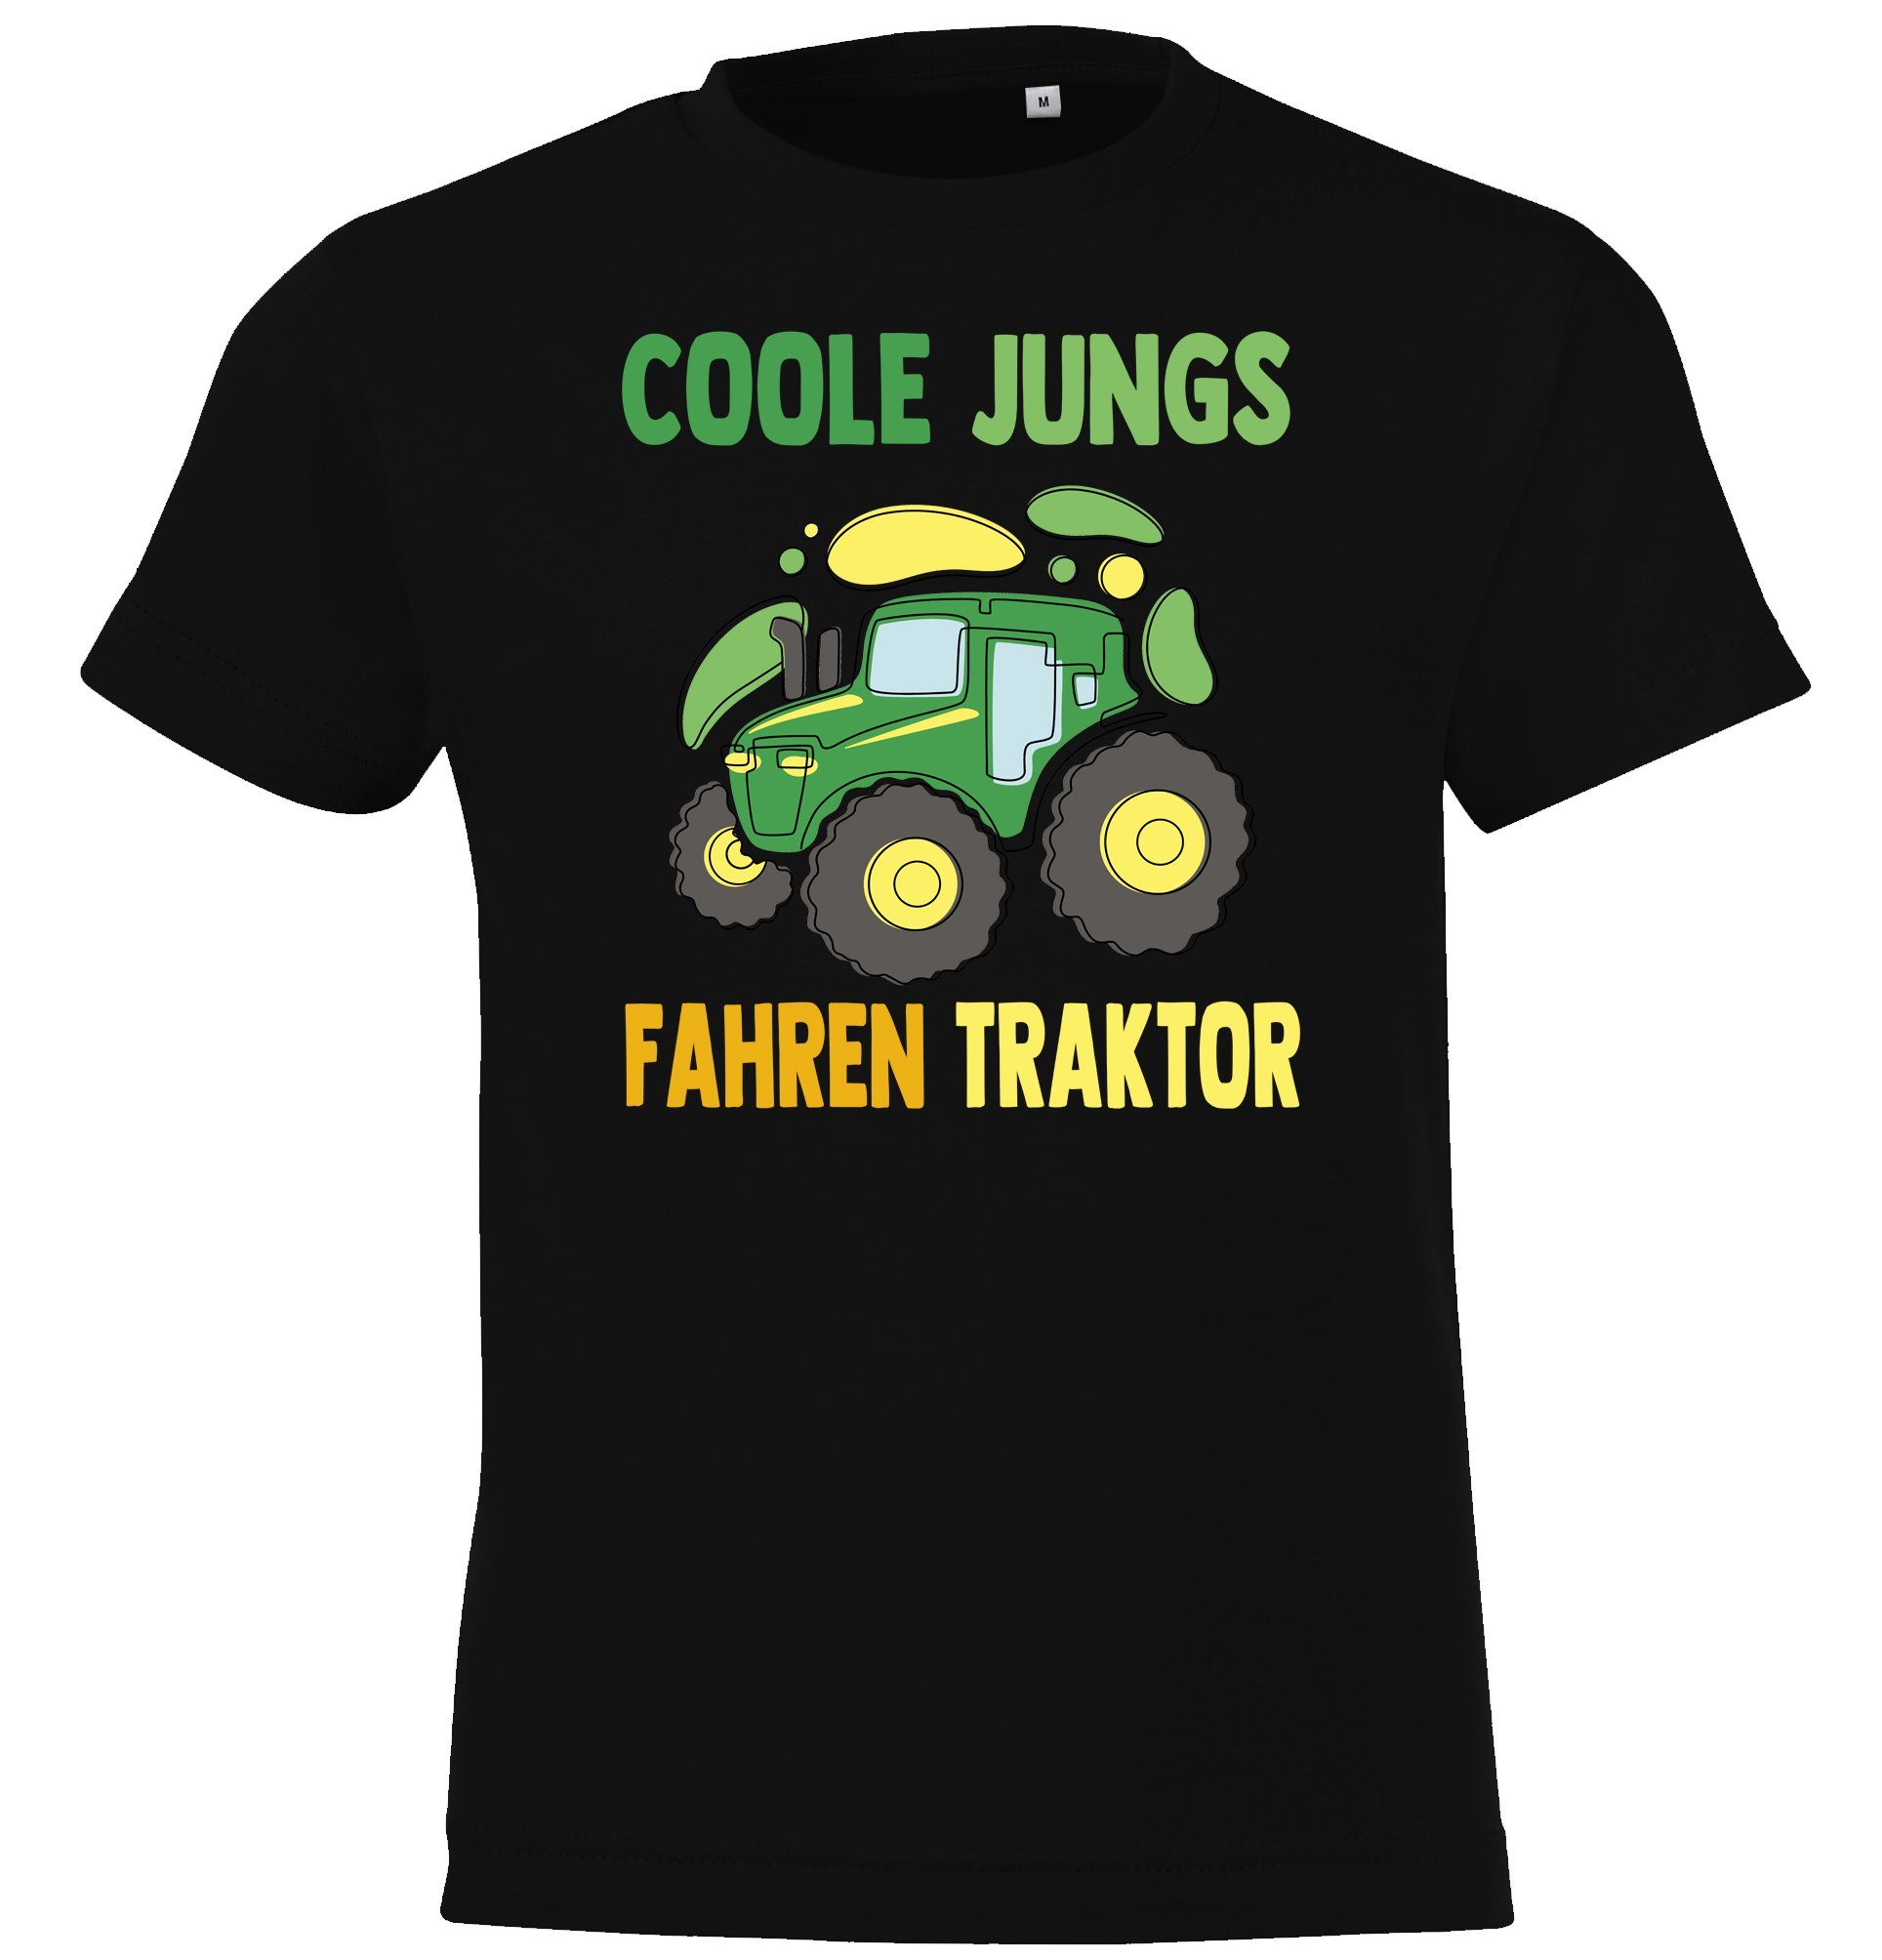 Coole Designz Youth mit Shirt Schwarz trendigen Kinder Jungs Frontprint Traktor T-Shirt Fahren